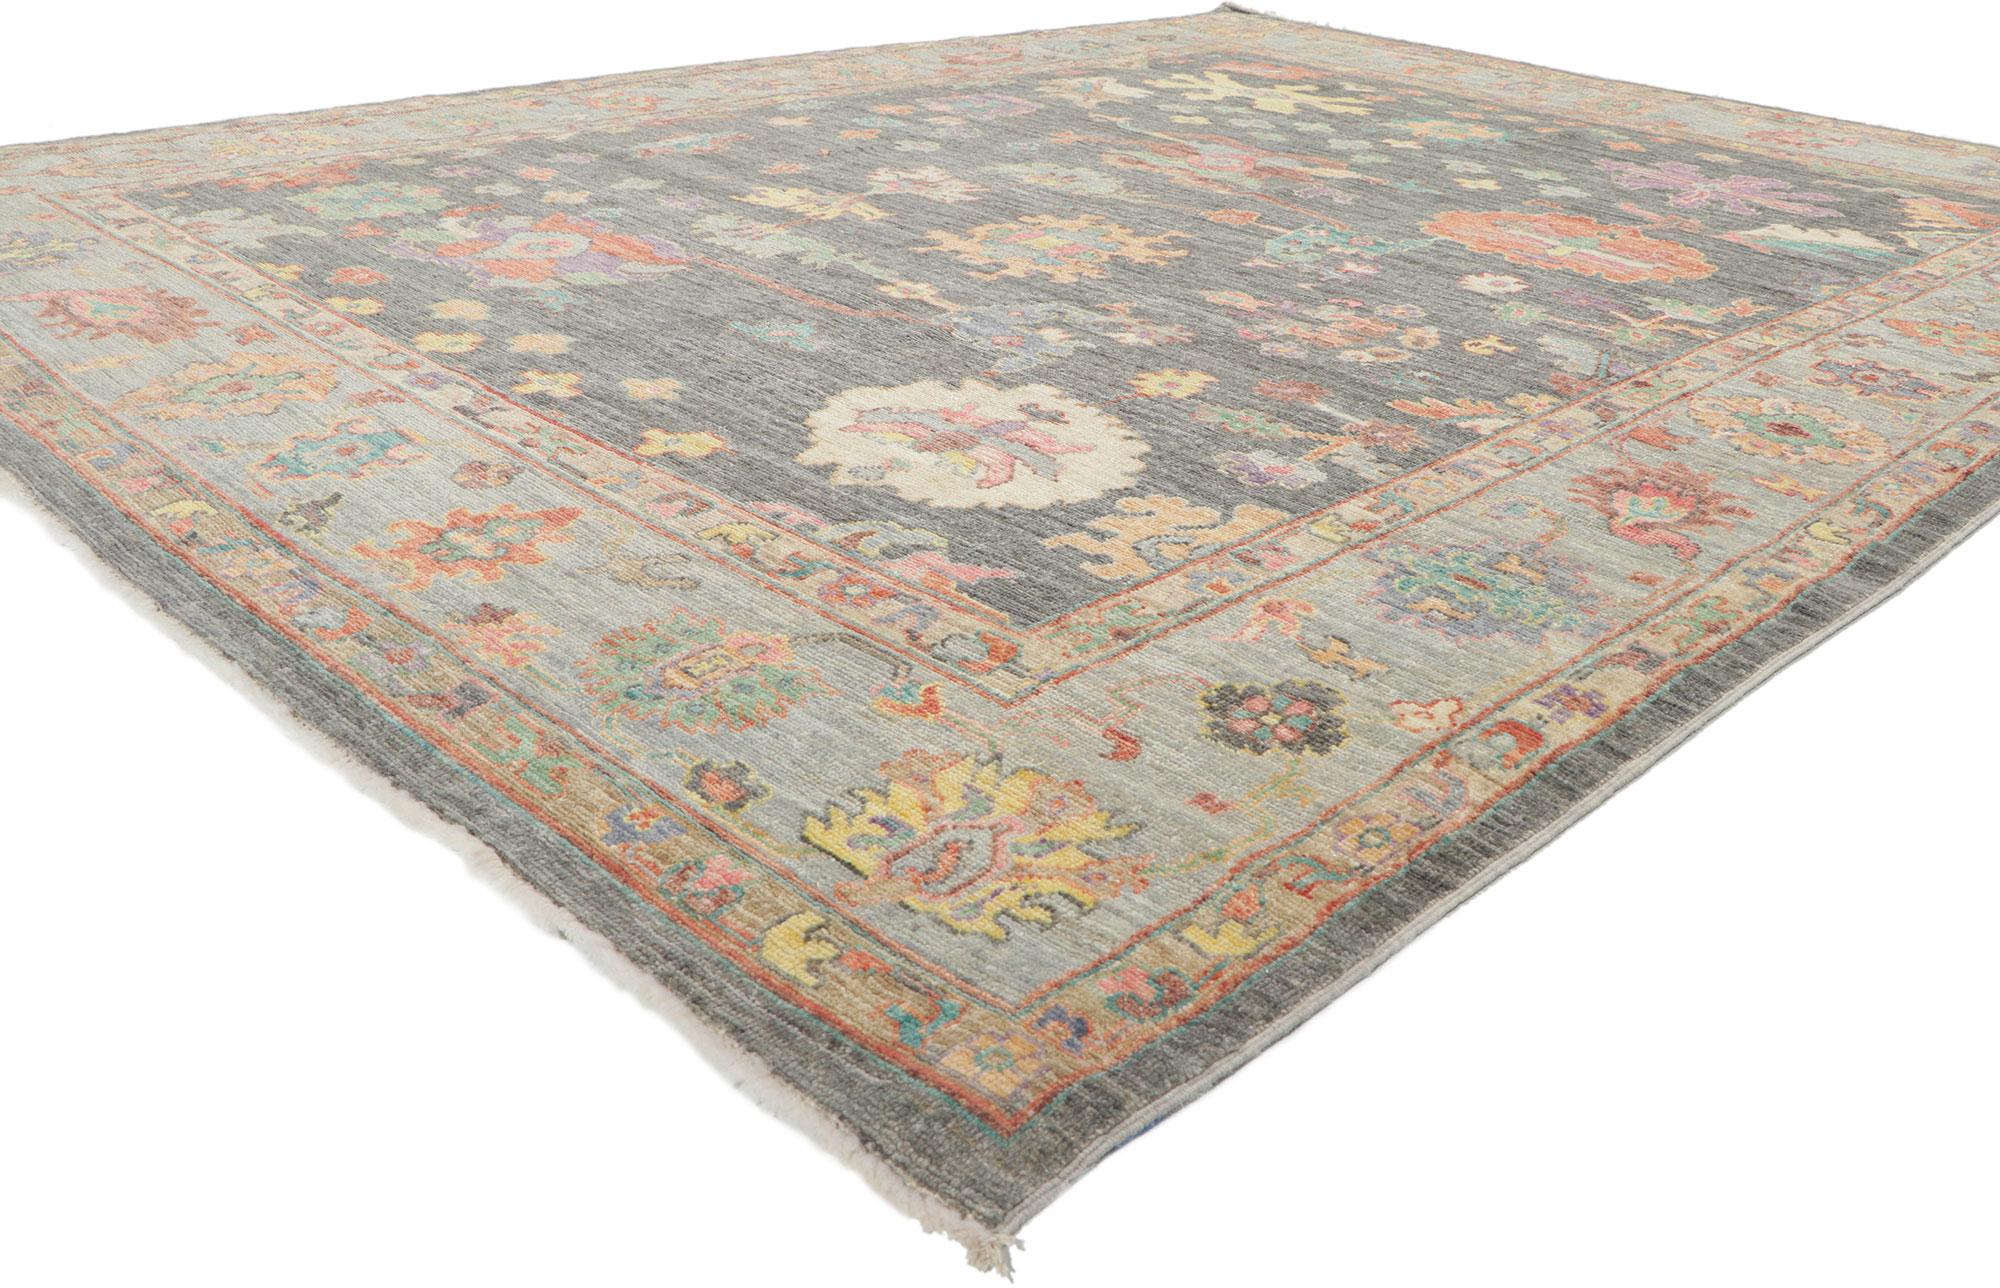 80970 new contemporary Oushak rug, 08'00 x 10'05.